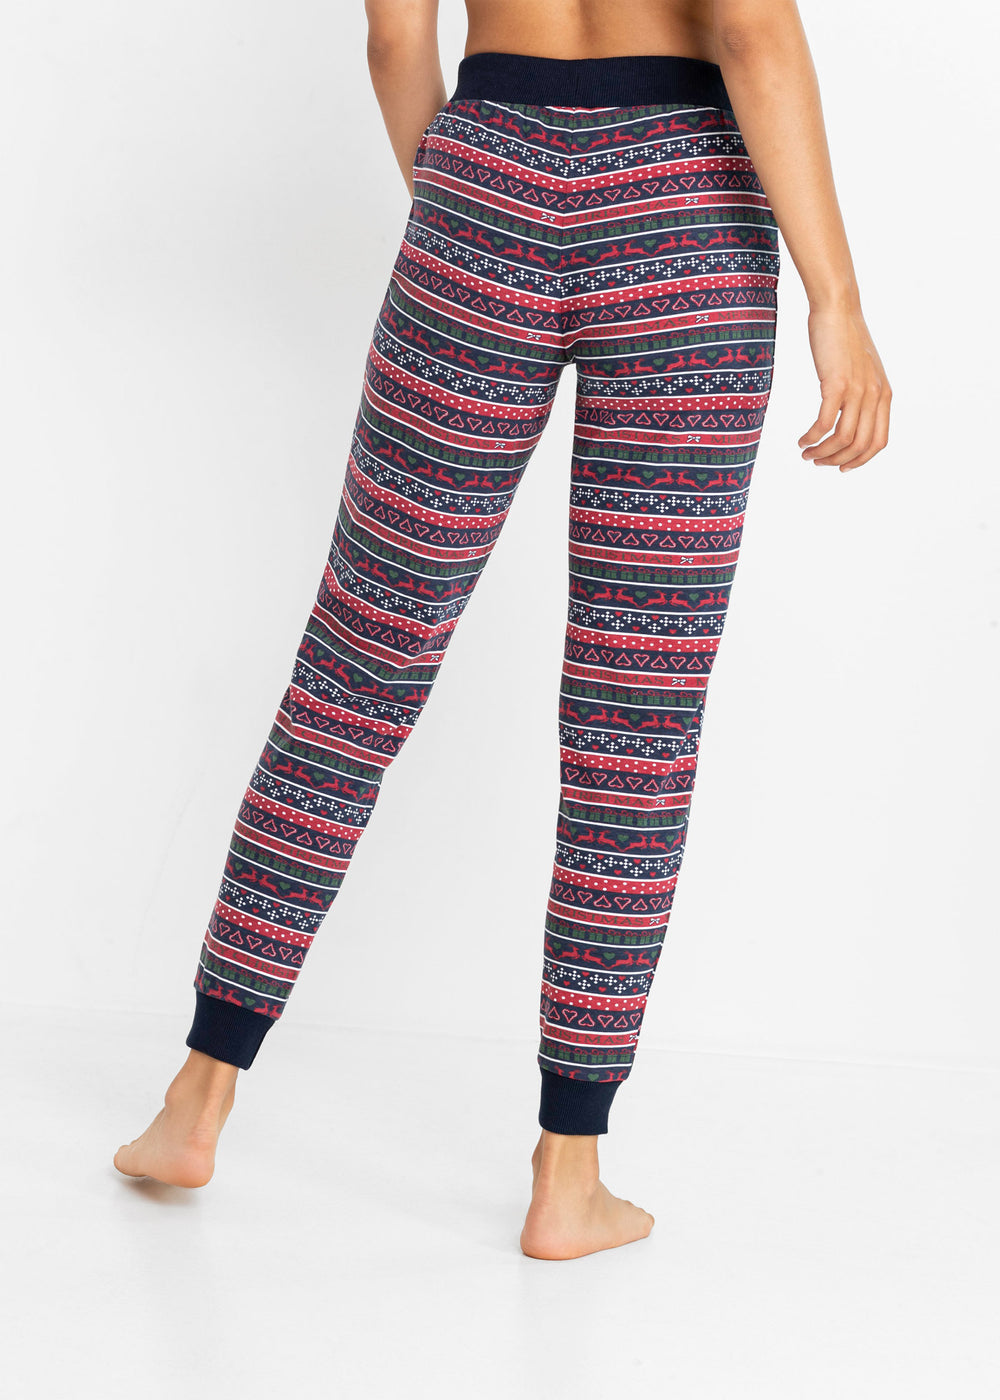 JUNZAN Winter Christmas Pajamas Pants For Women Pjs Pants For Women Warm XS  at Amazon Women's Clothing store